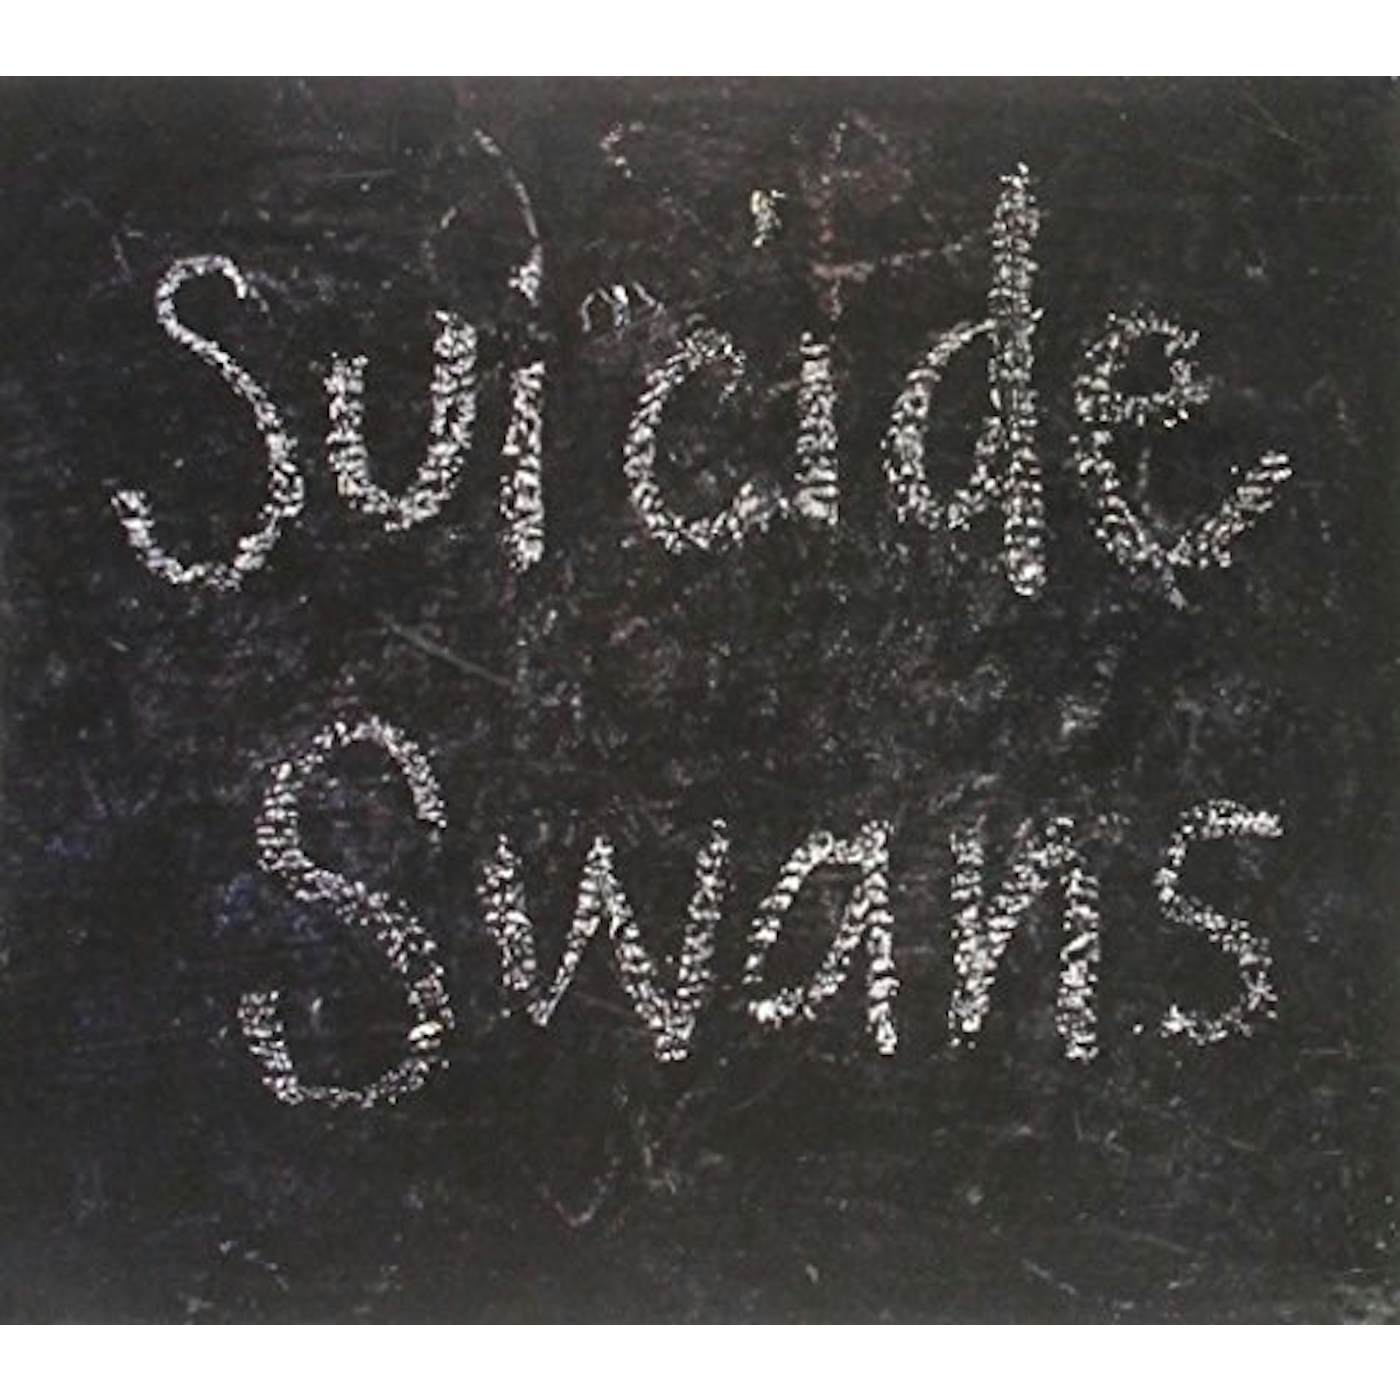 SUICIDE SWANS CD